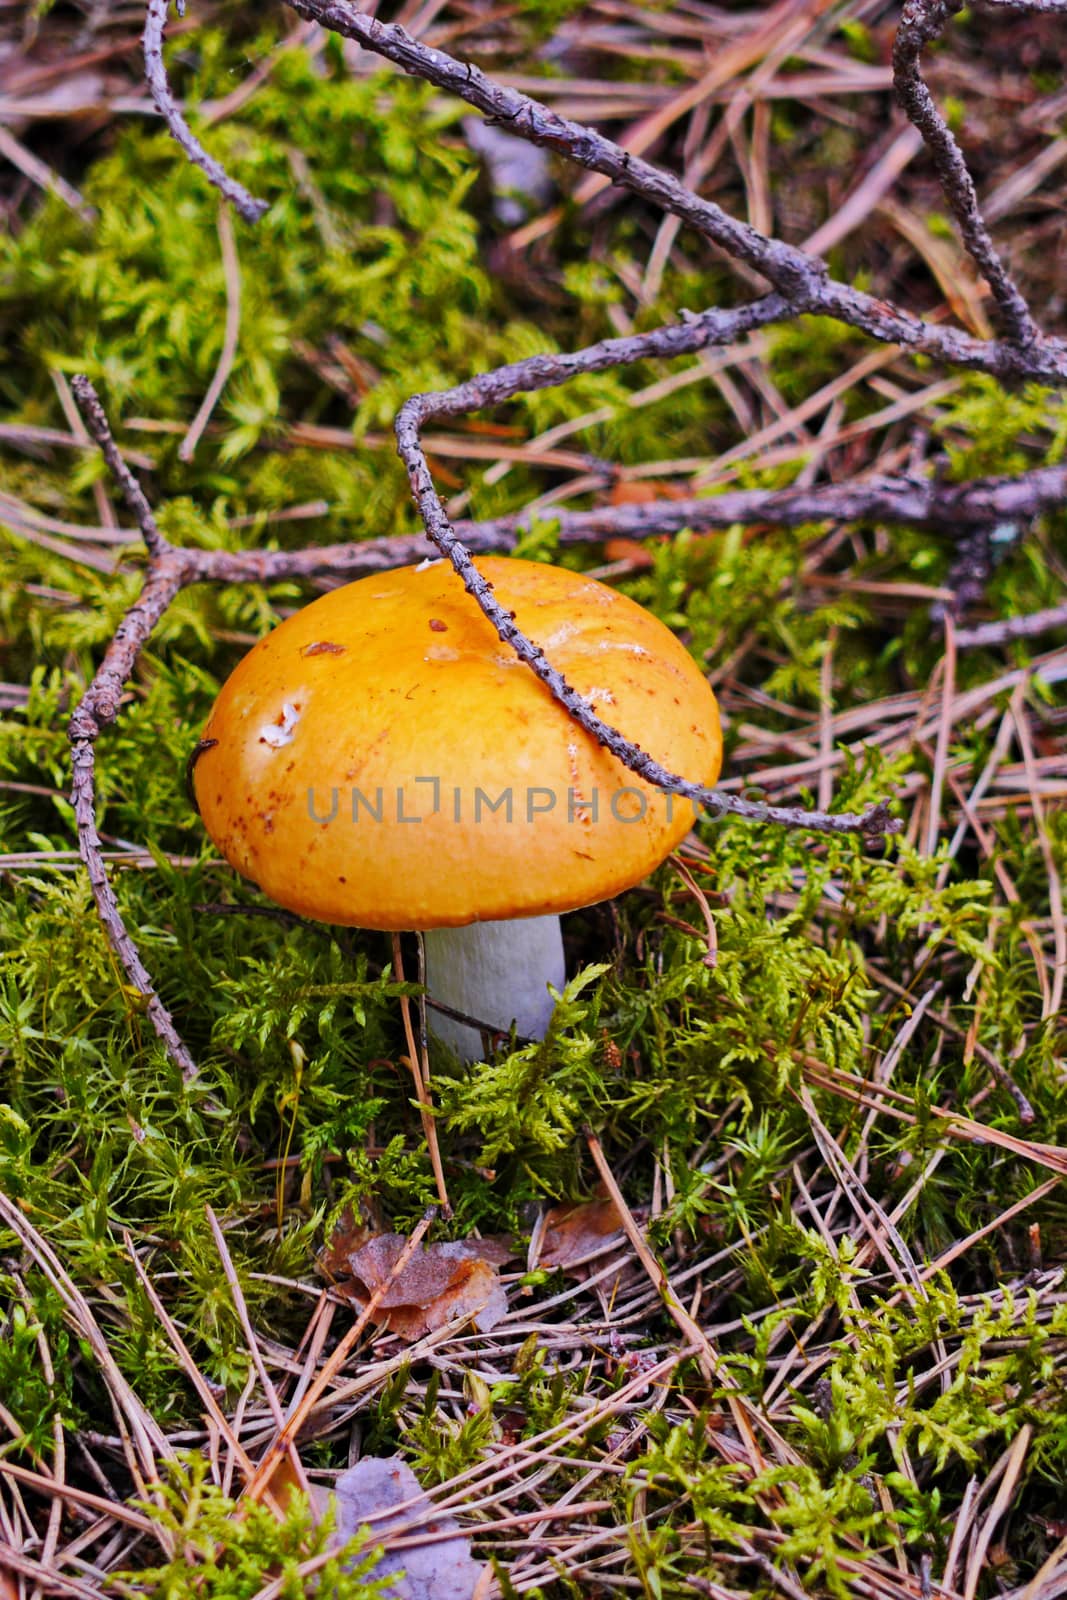 Large beautiful mushroom on a white stalk with an orange cap